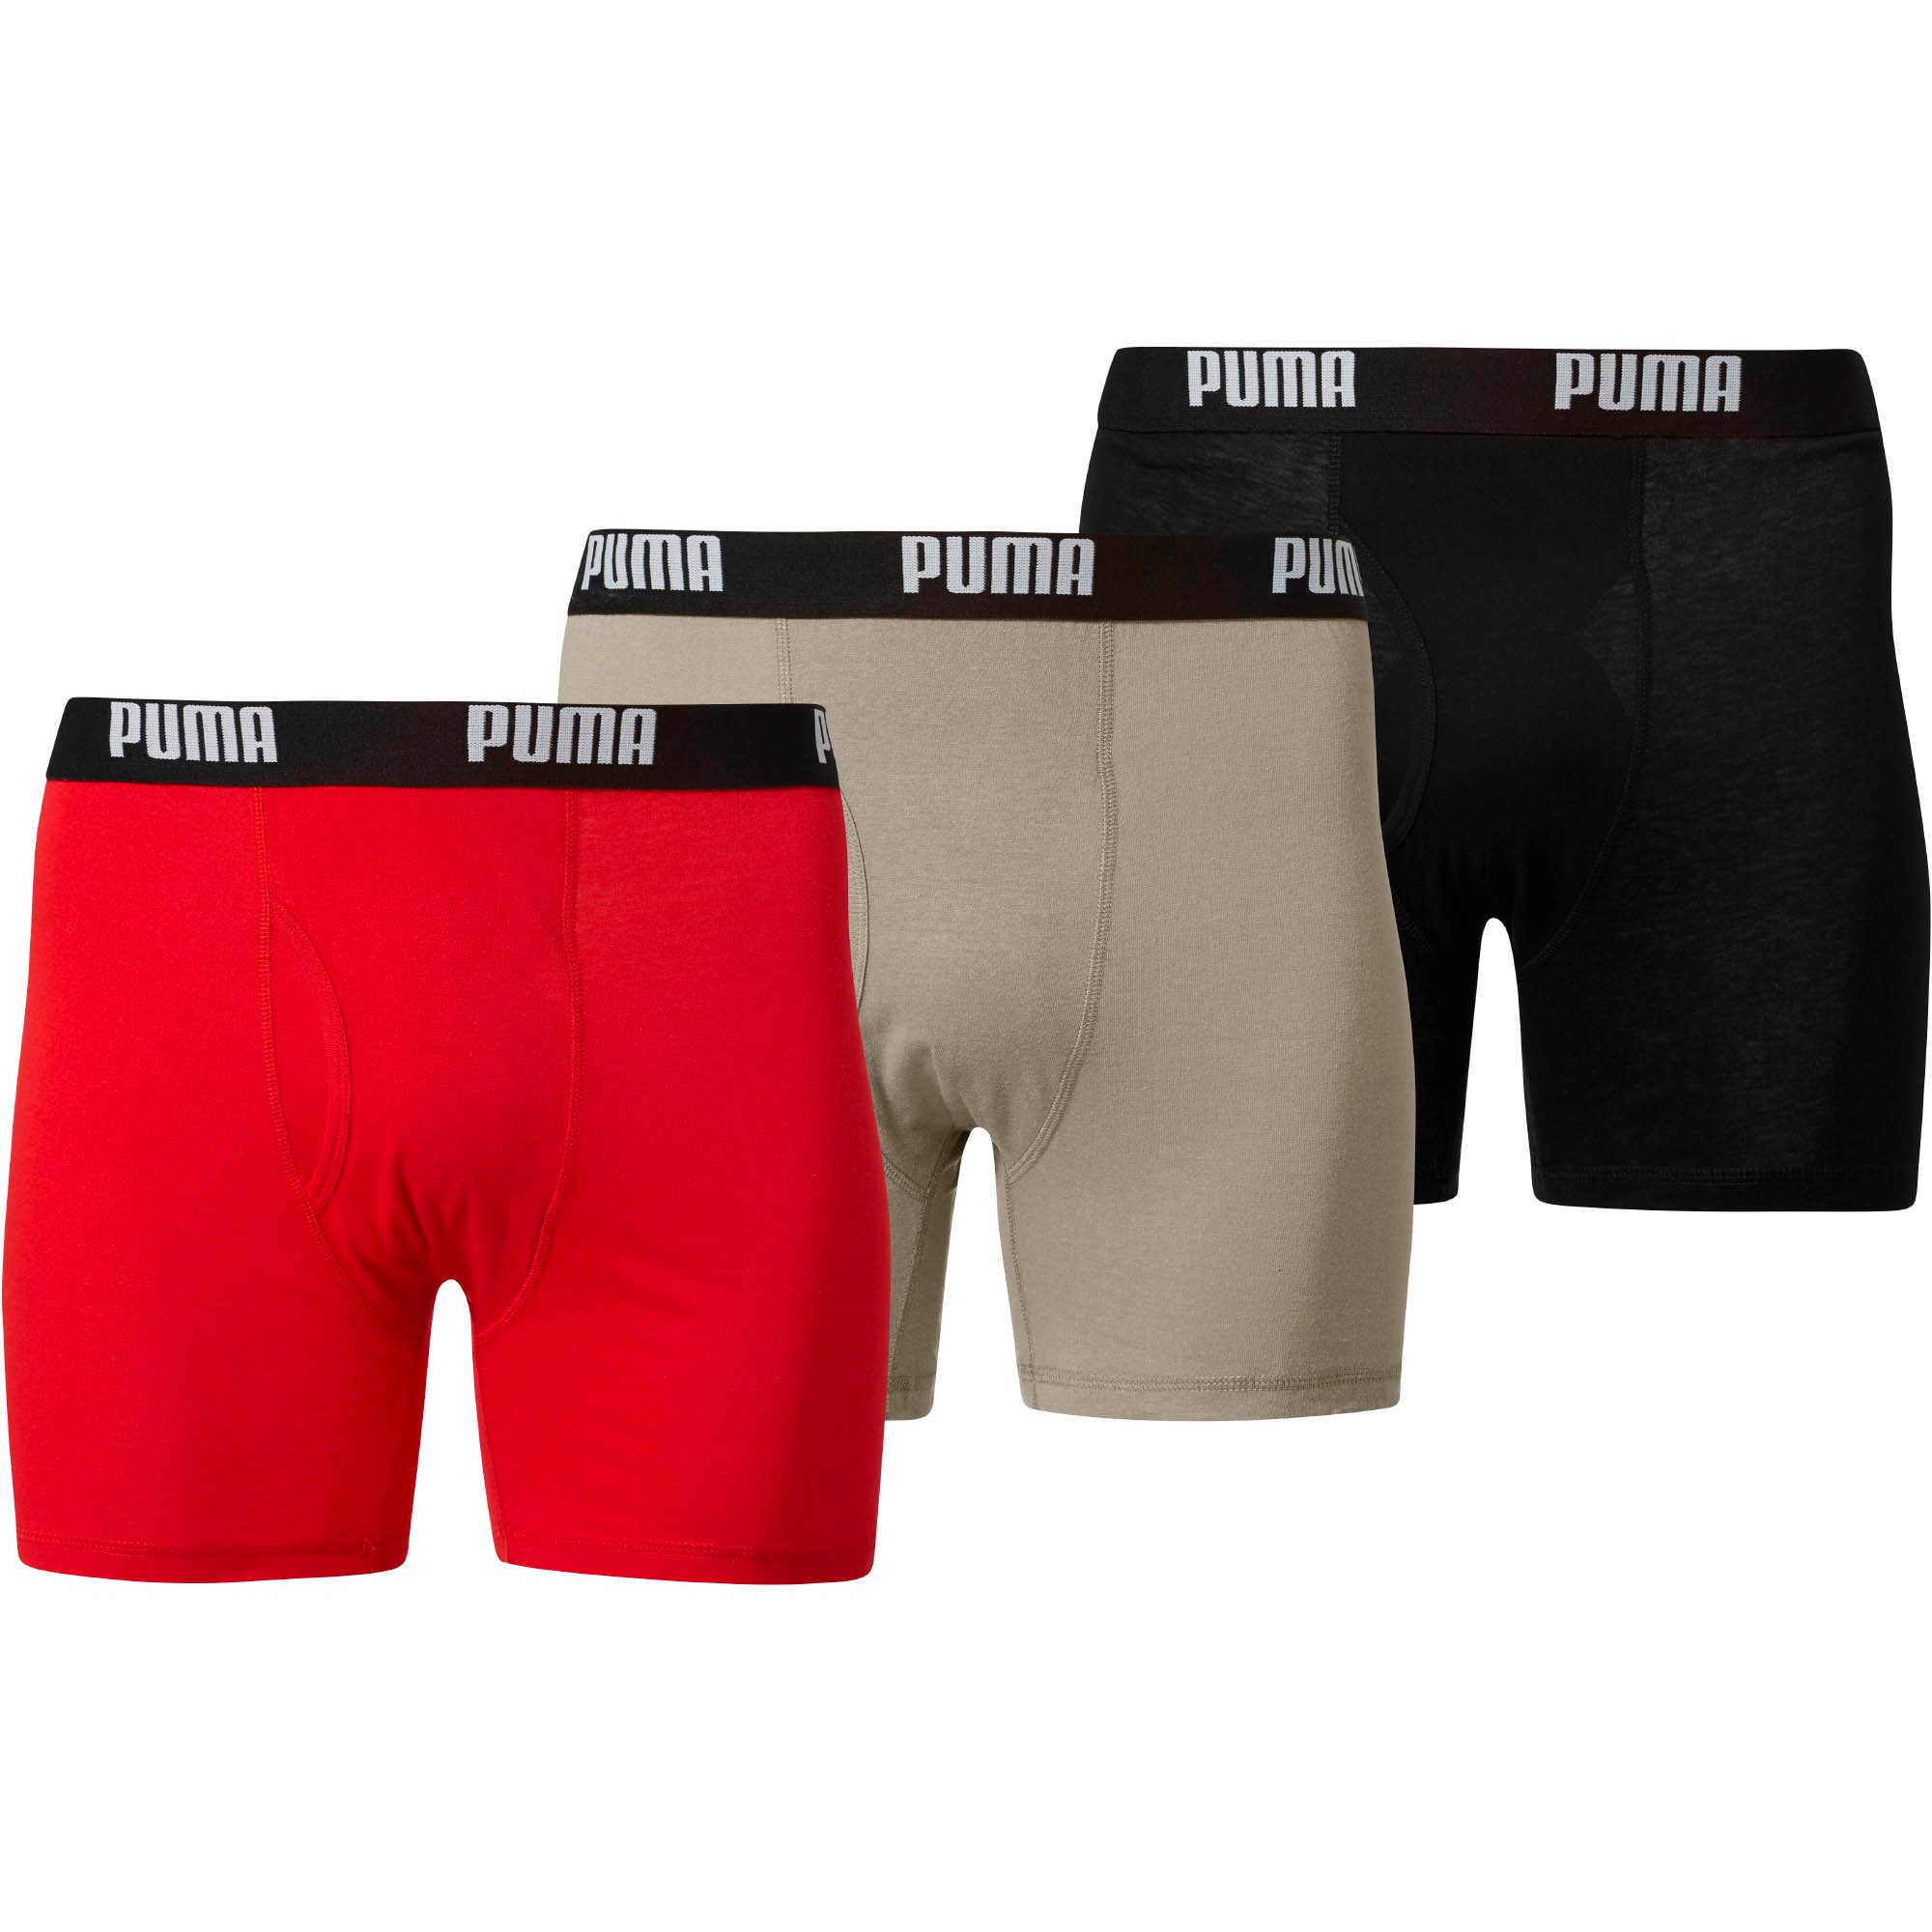 puma cotton boxer briefs